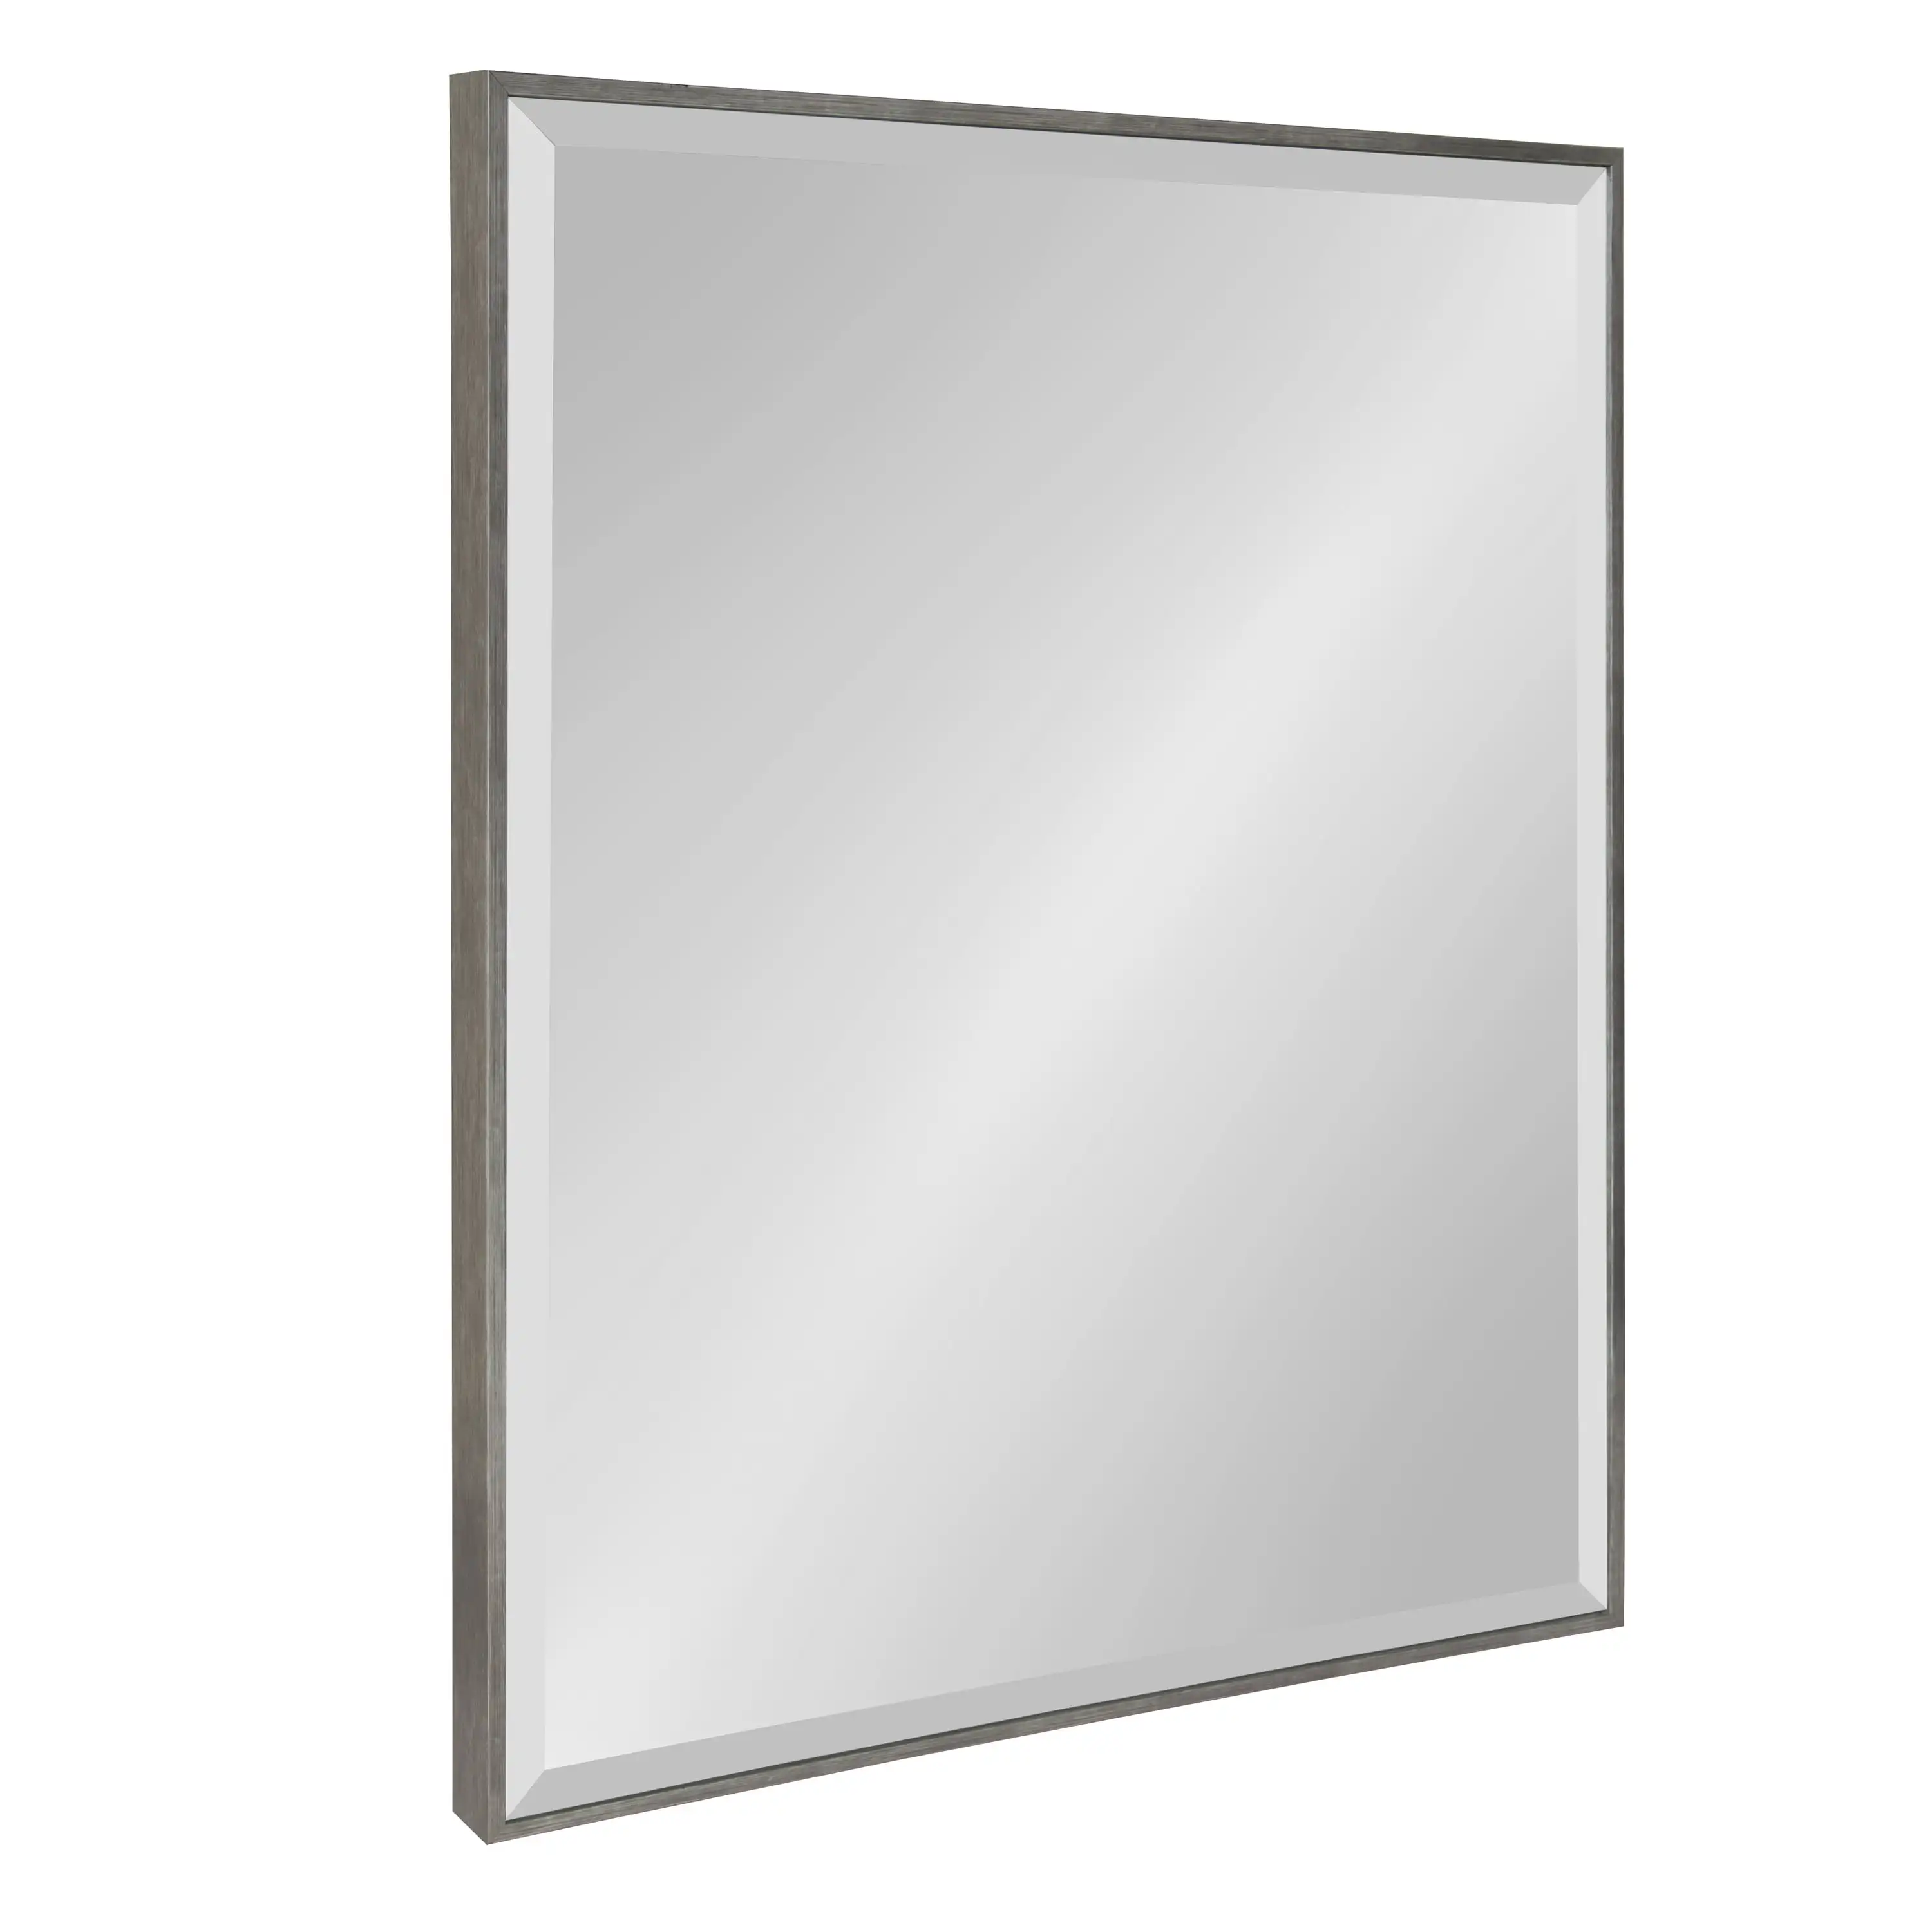 

Large Framed Modern Rectangle Wall Mirror, 23 x 29, Dark Silver, Sleek Decorative Mirror for Wall